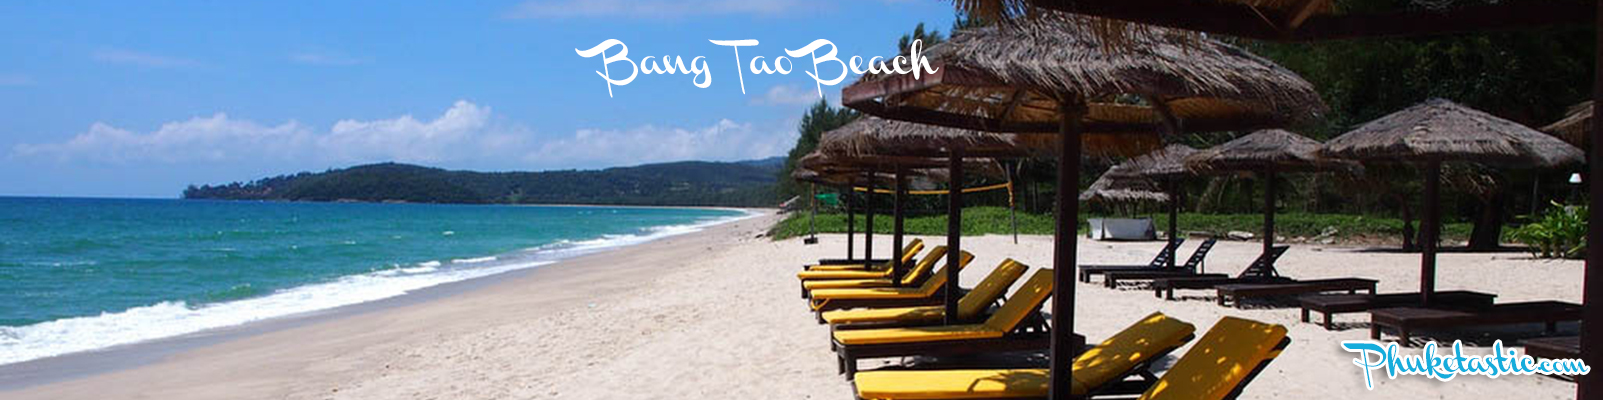 bang-tao-beach